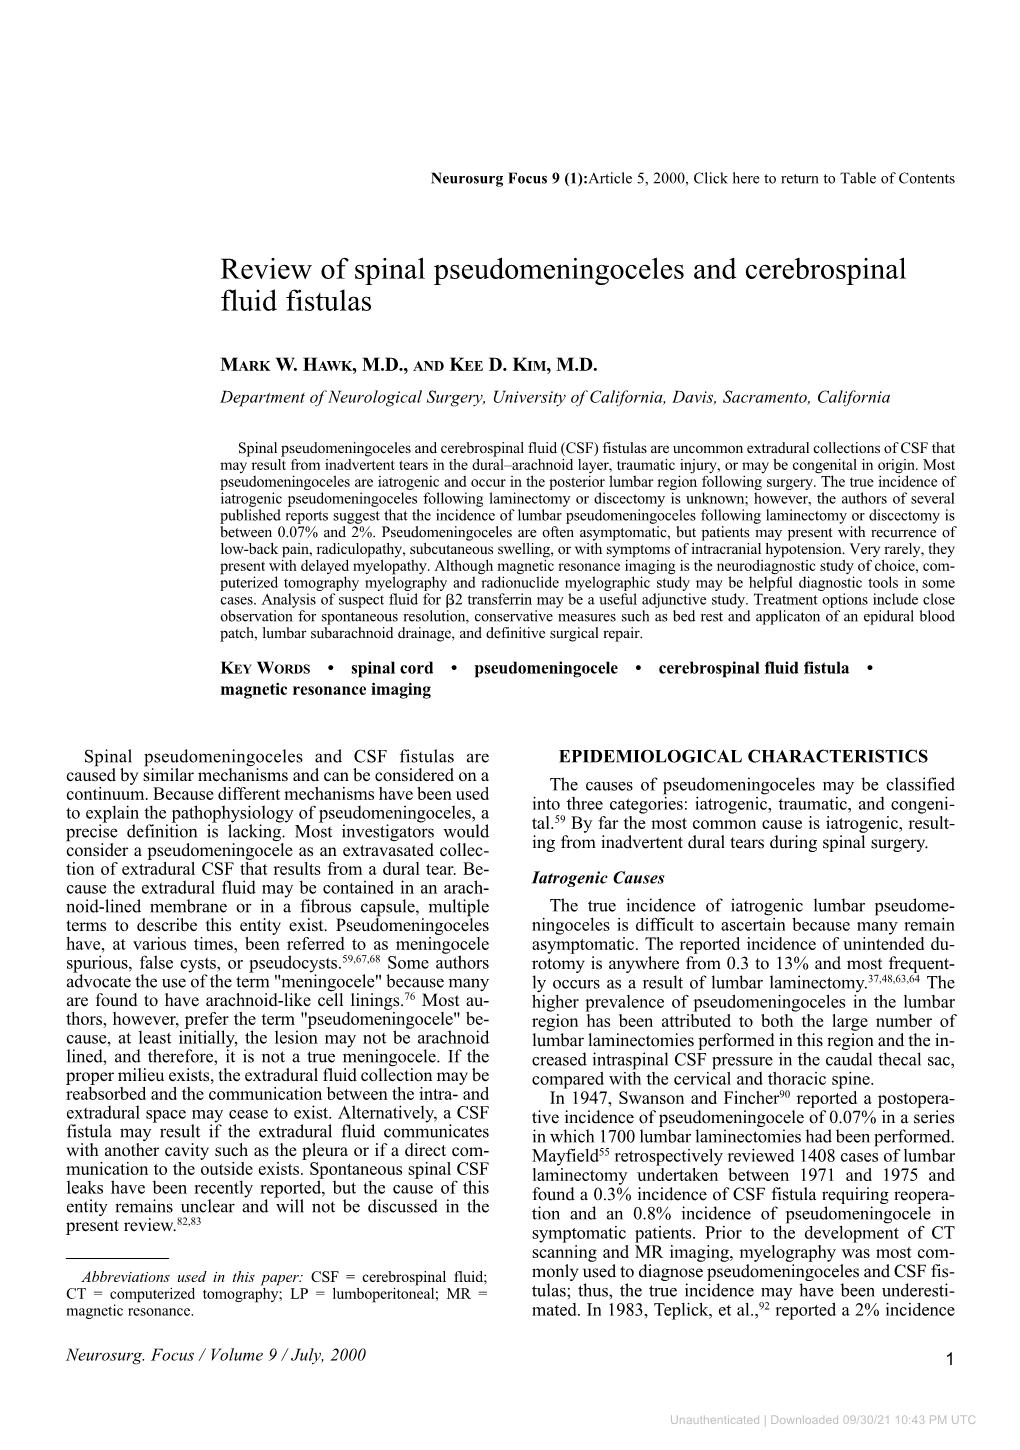 Review of Spinal Pseudomeningoceles and Cerebrospinal Fluid Fistulas